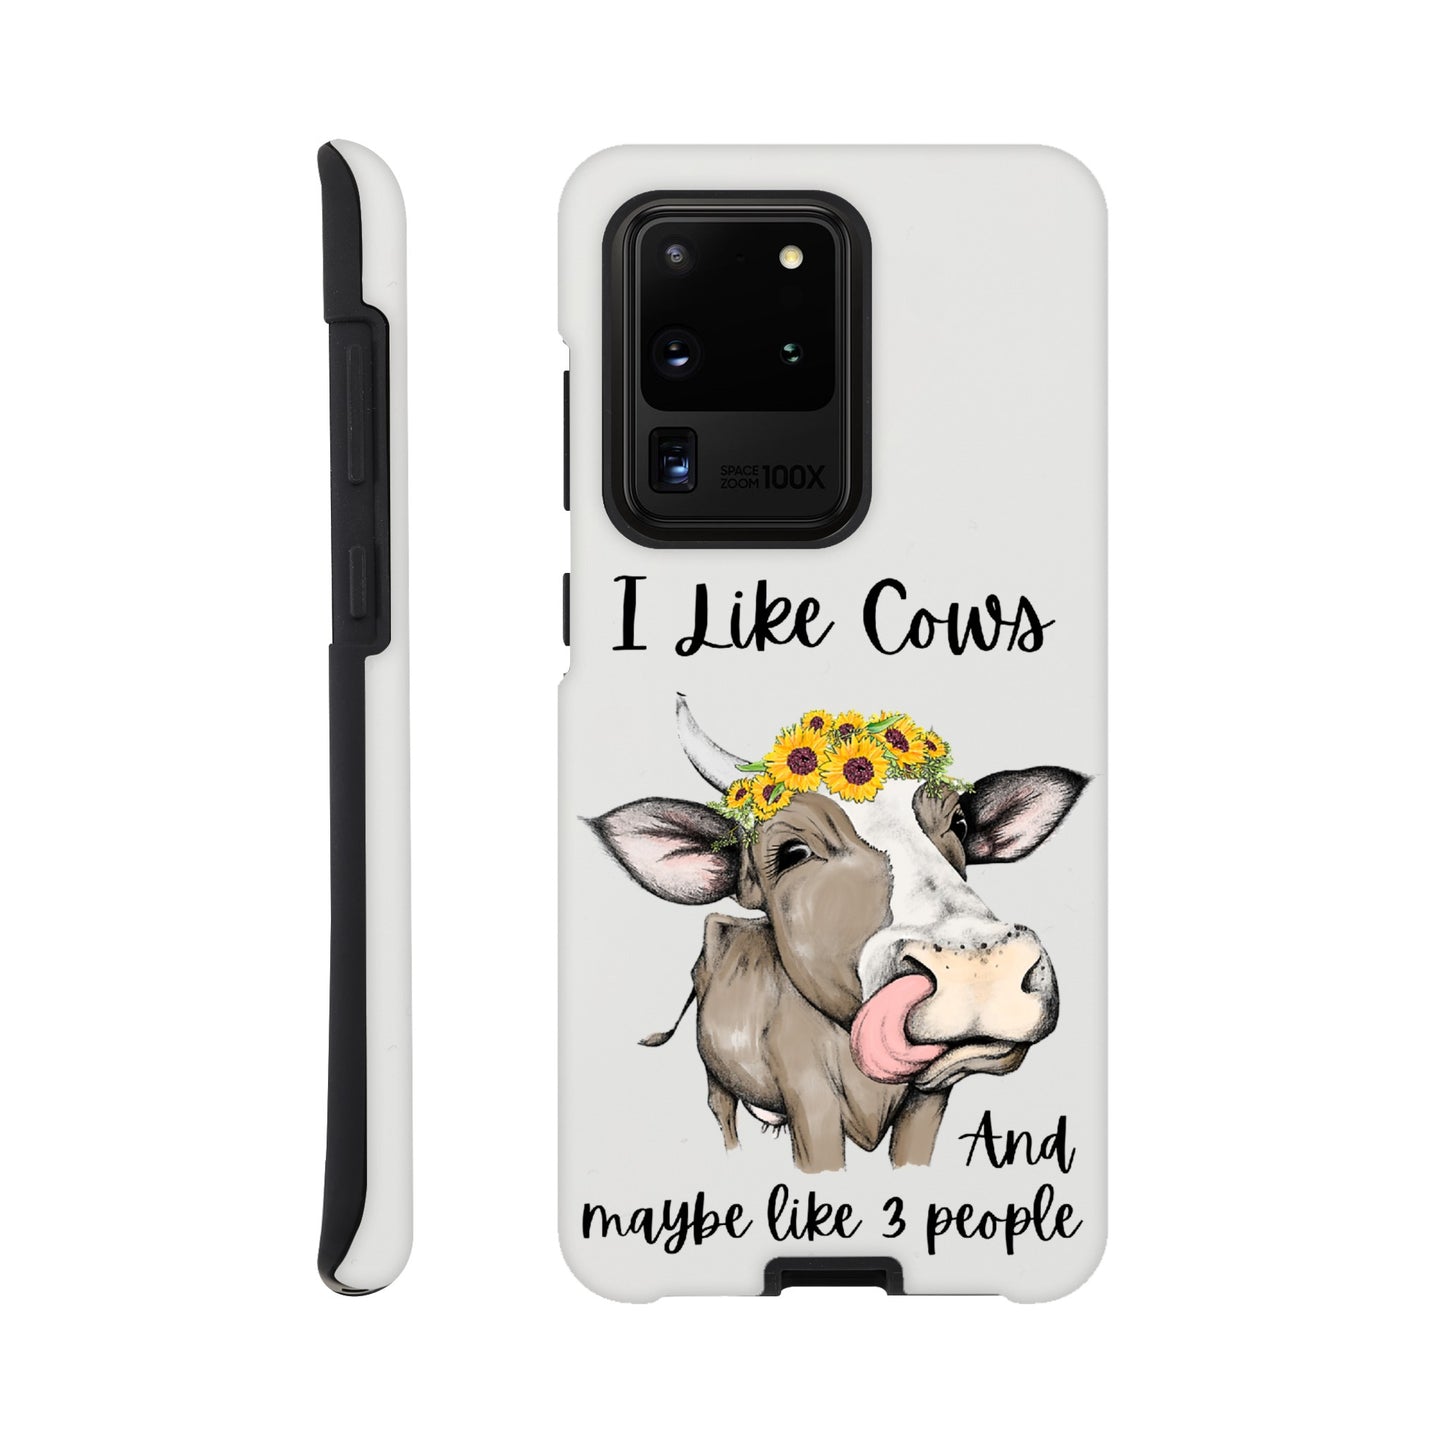 I Like Cows - Tough case